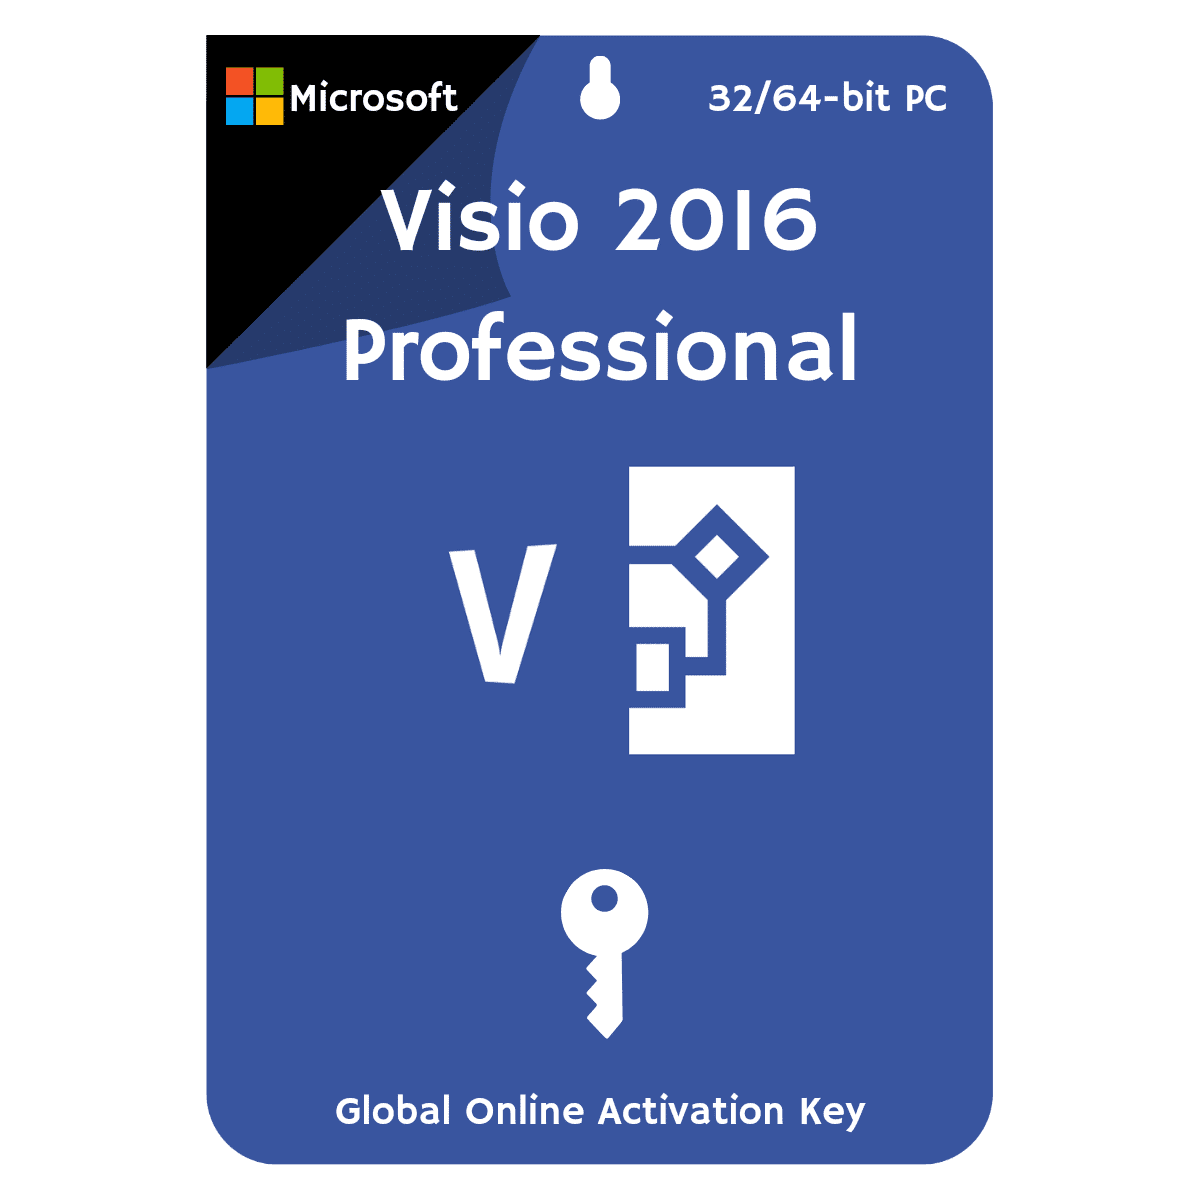 Microsoft Visio 2016 Professional Product Key-bind License